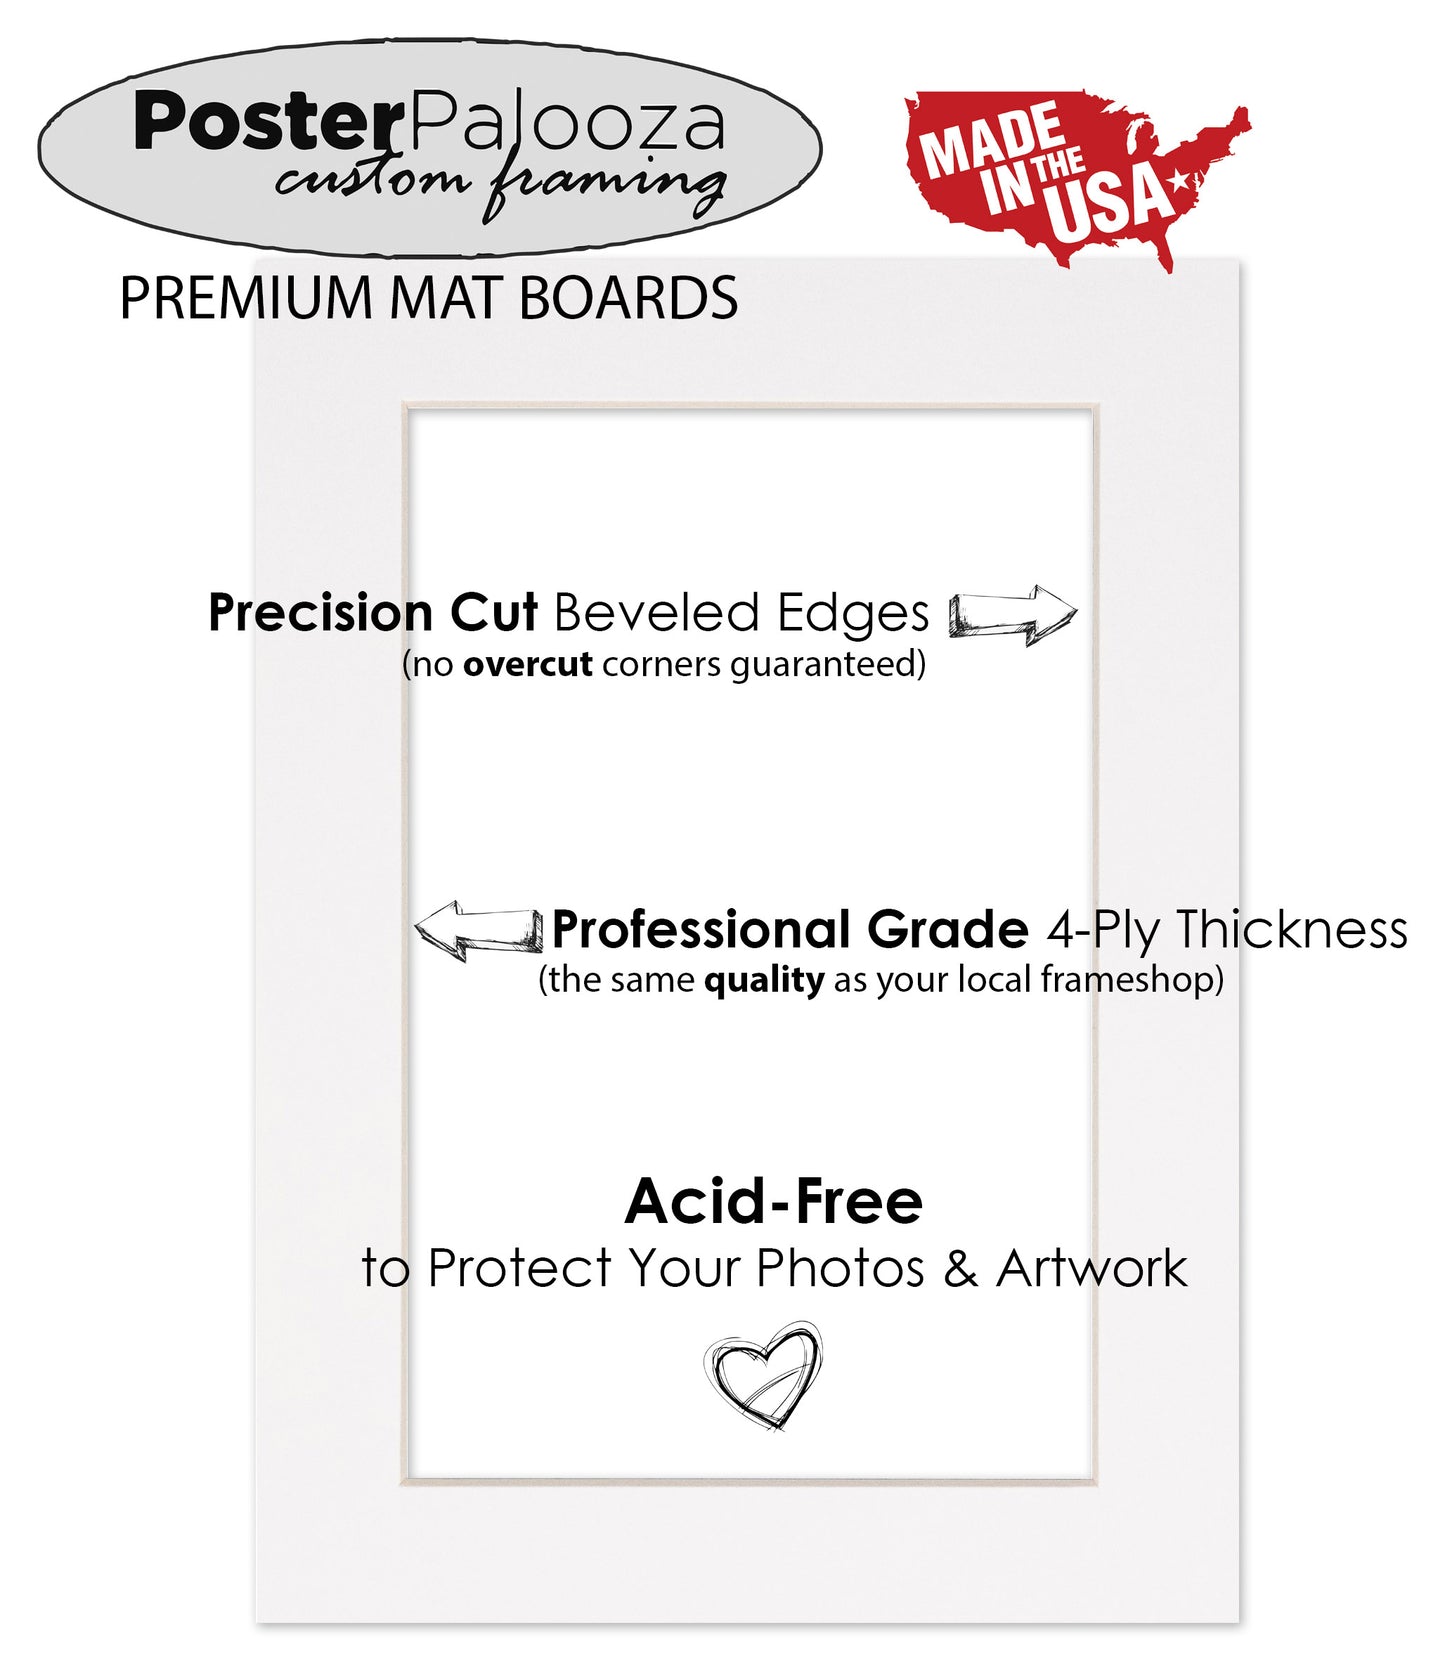 Pack of 25 Pistachio Green Precut Acid-Free Matboards